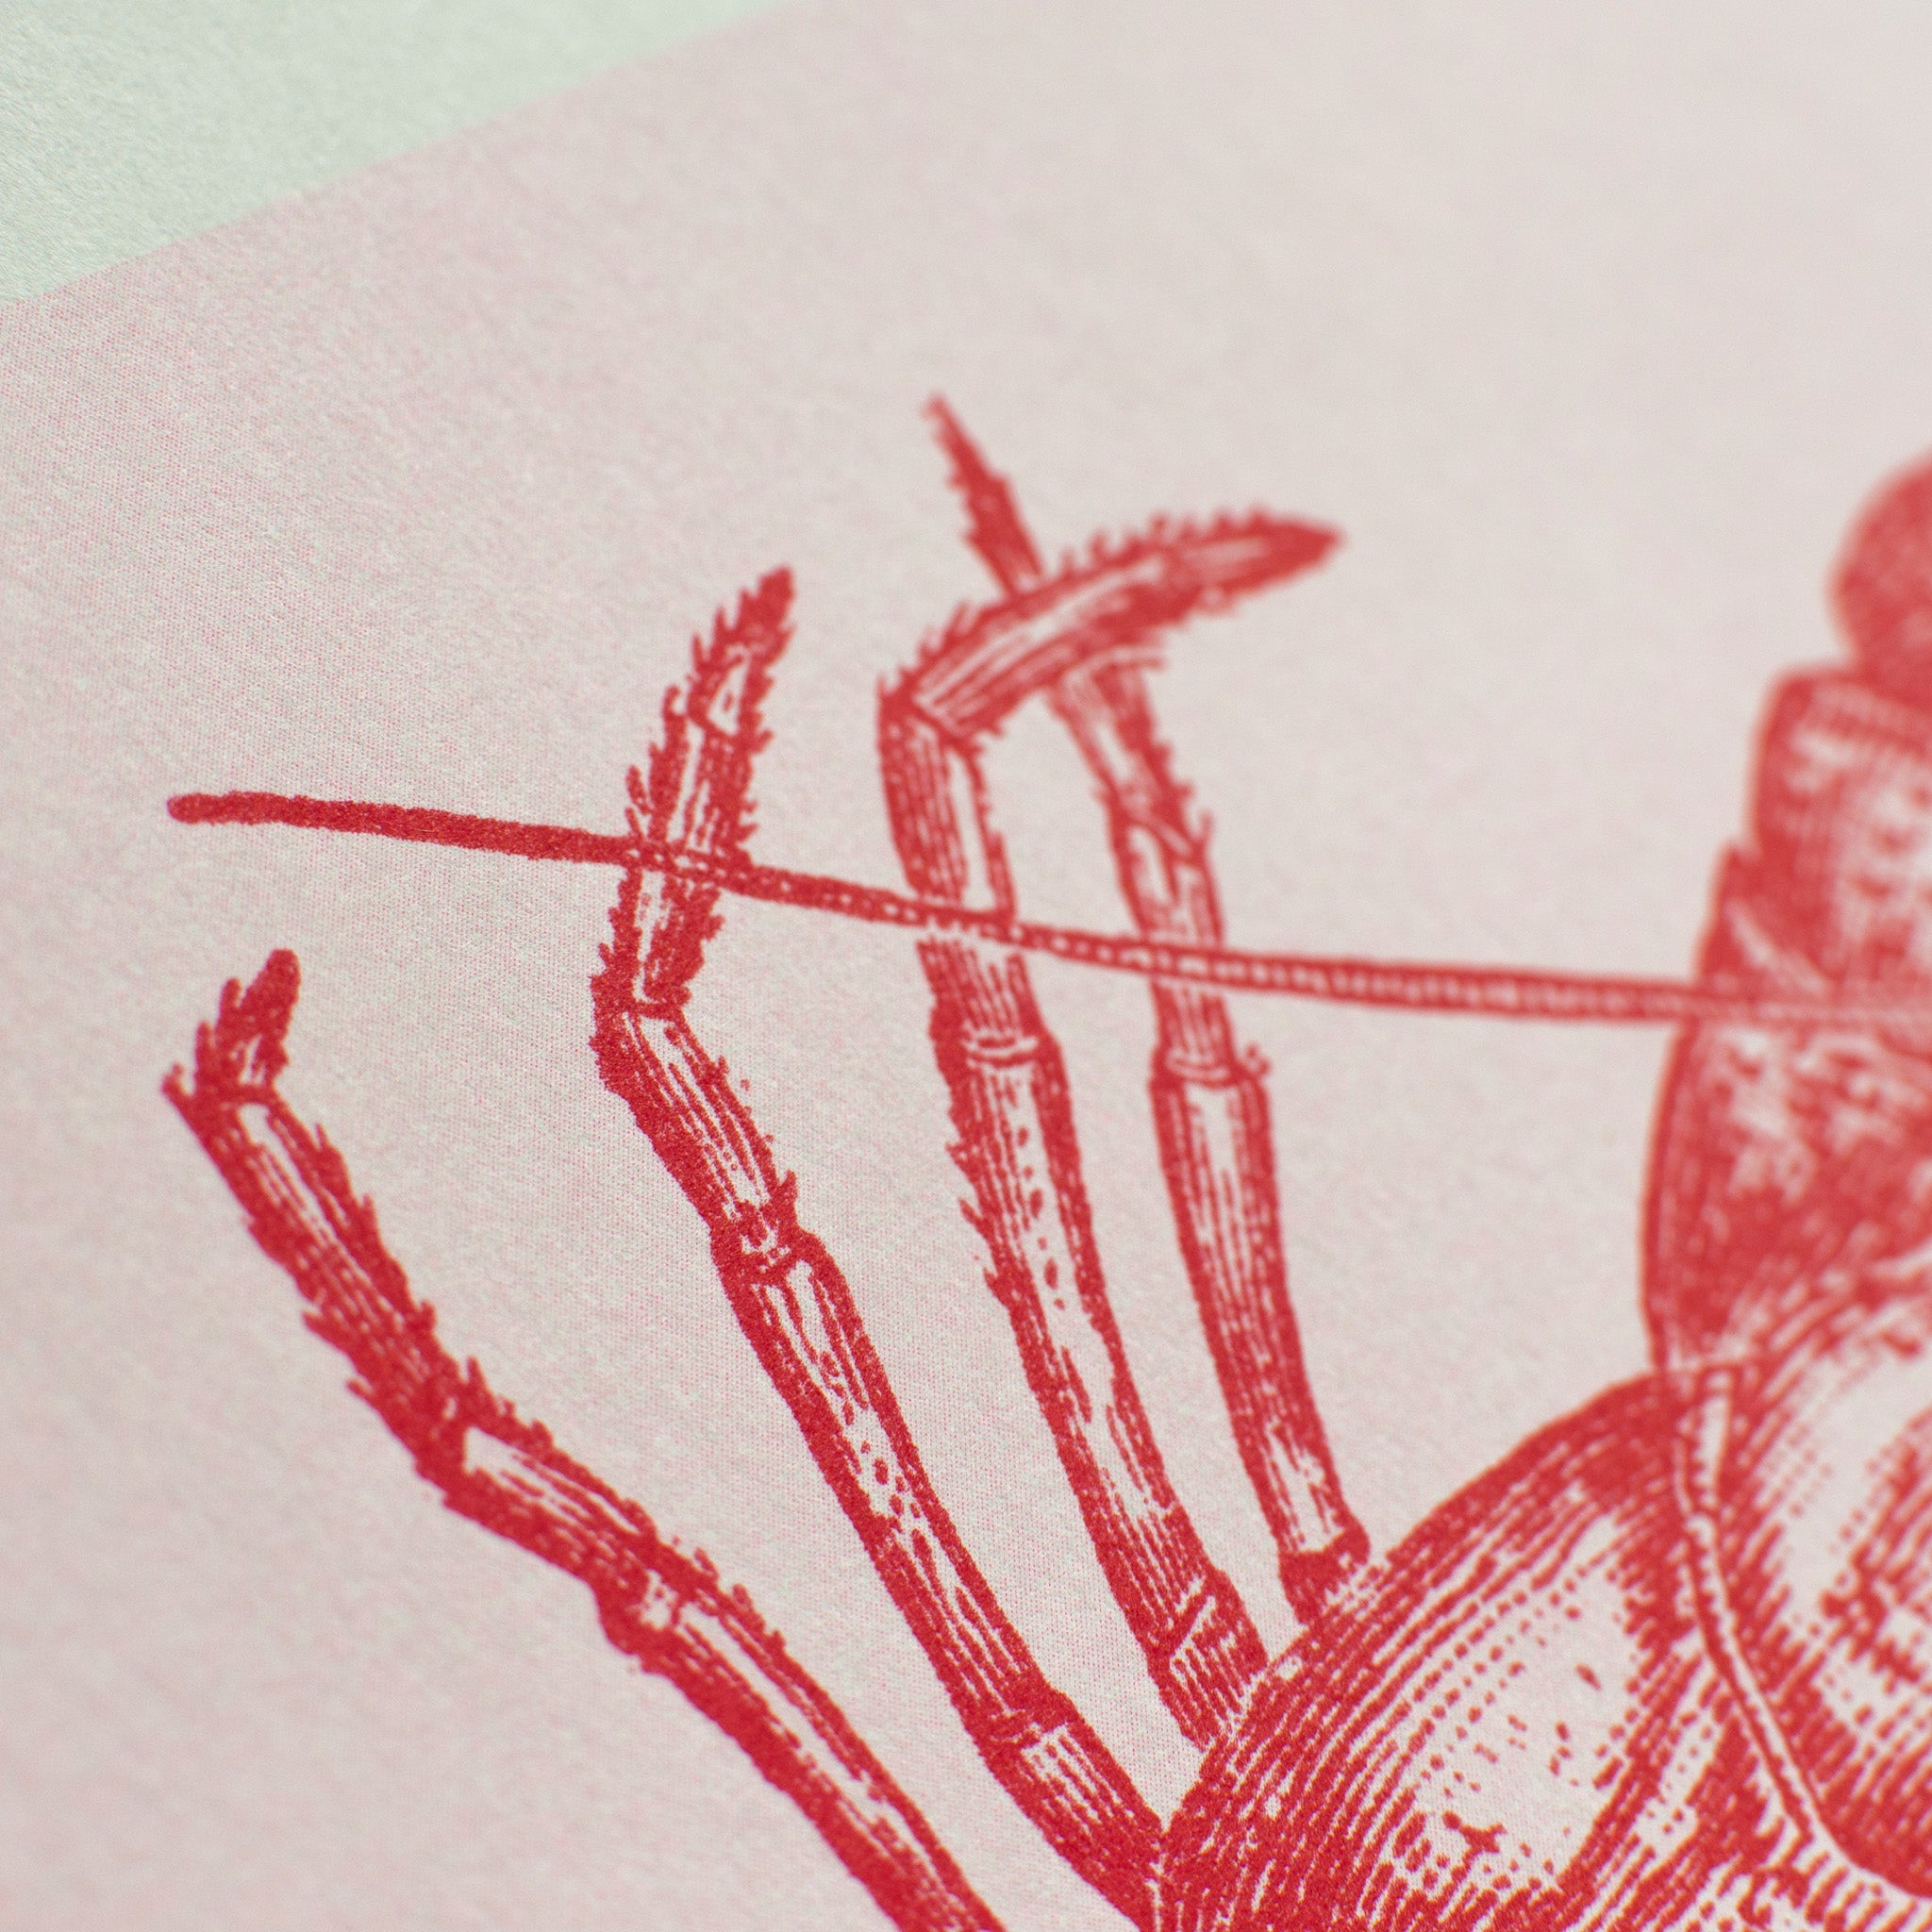 Risographie Artprint Lobster